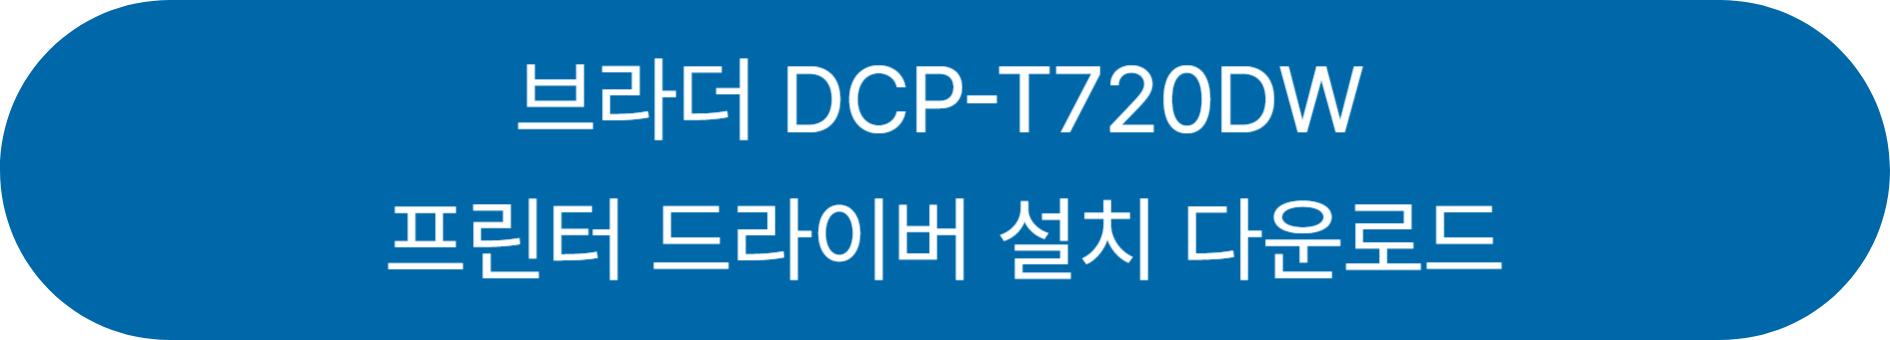 DCP-T720DW 바로가기